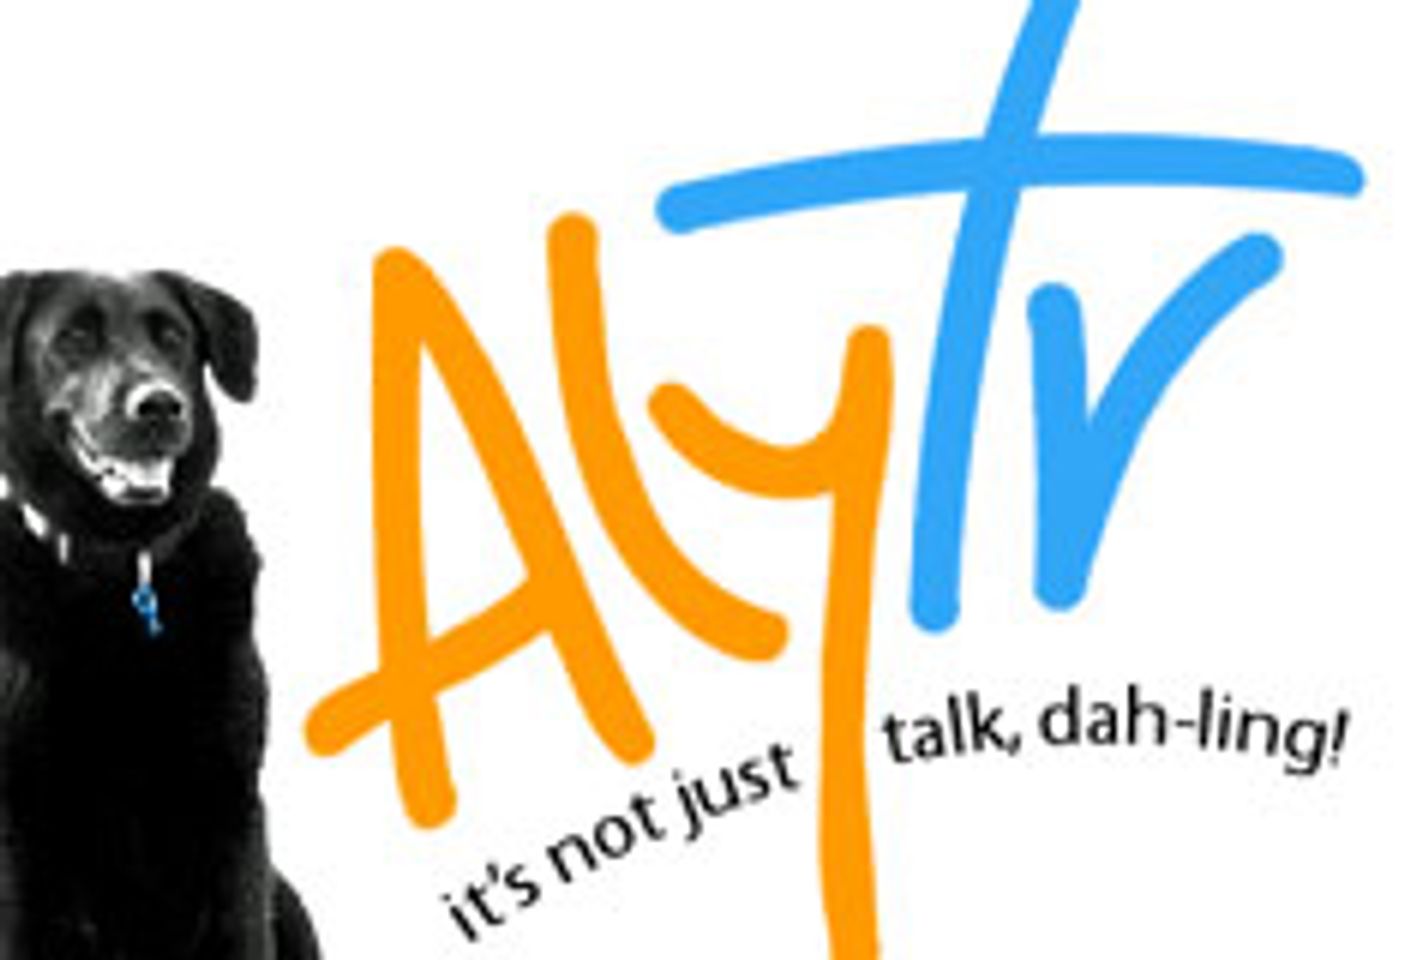 AlyTV Signs With XBiz